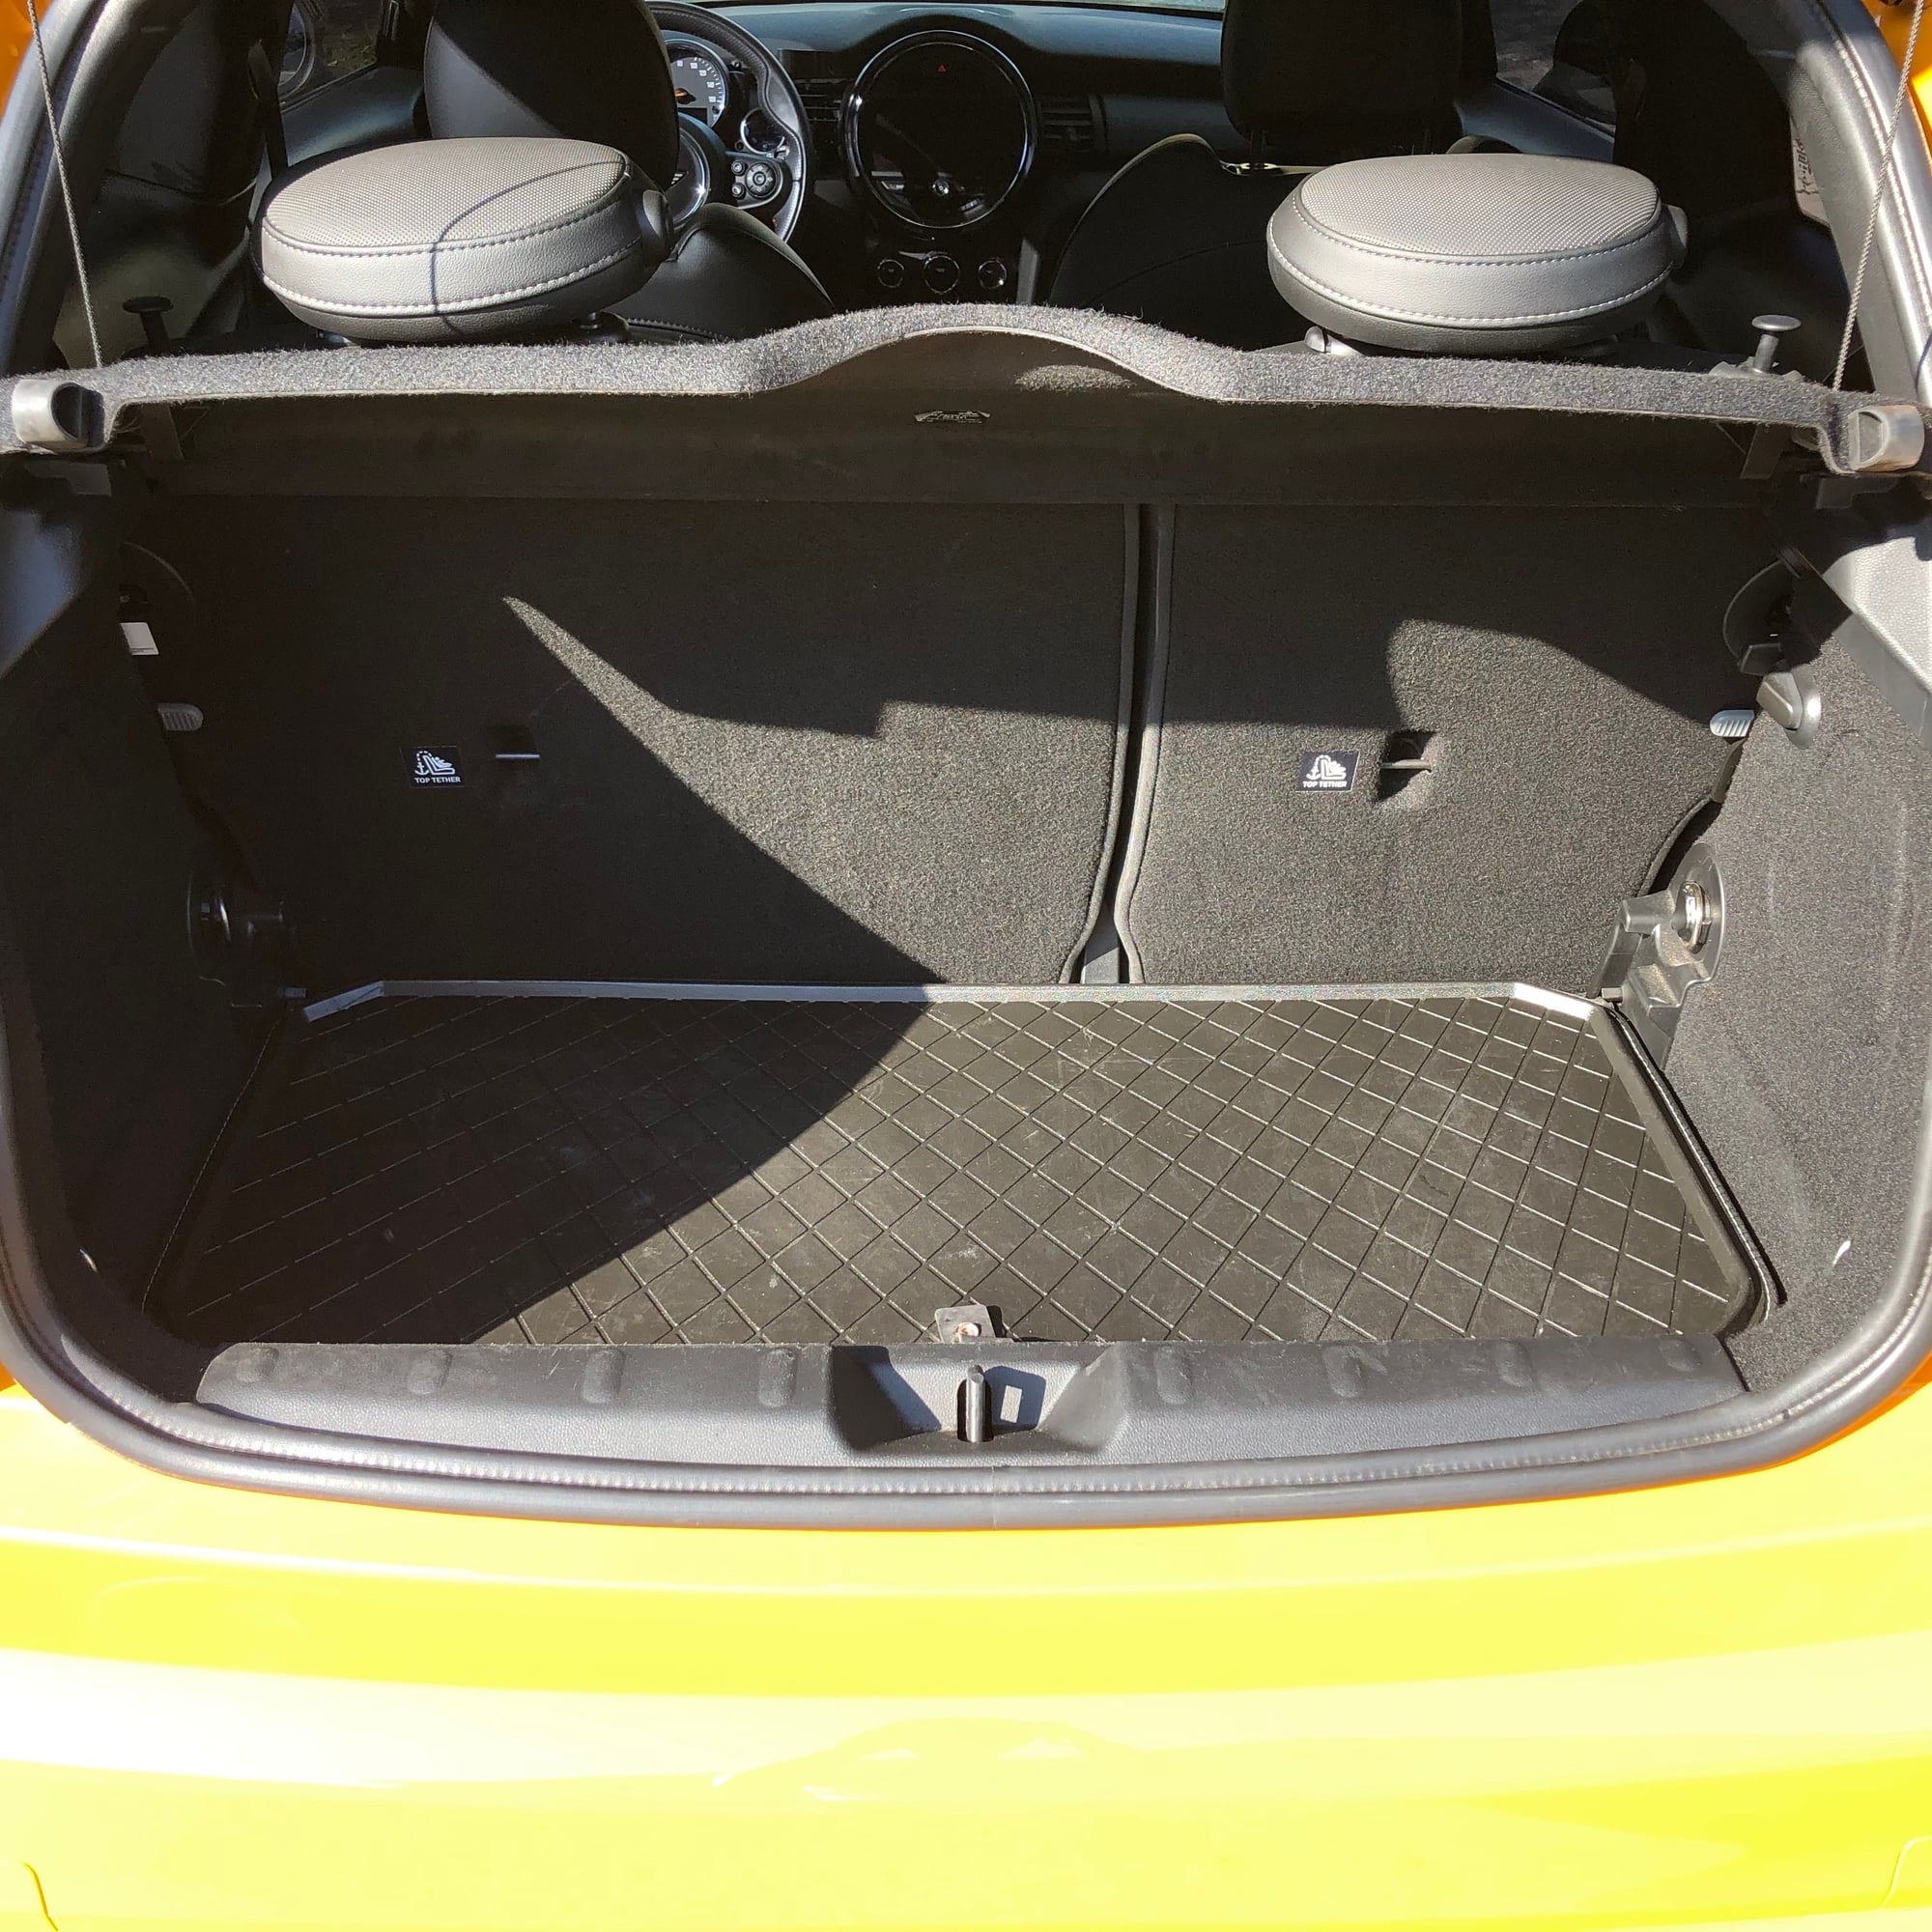 2017 Mini Cooper - Fully Loaded 2017 Mini Cooper S 6-Speed + Mods - Used - VIN WMWXP7C33H3C61951 - 37,000 Miles - 4 cyl - 2WD - Manual - Hatchback - Orange - Marlton, NJ 08053, United States